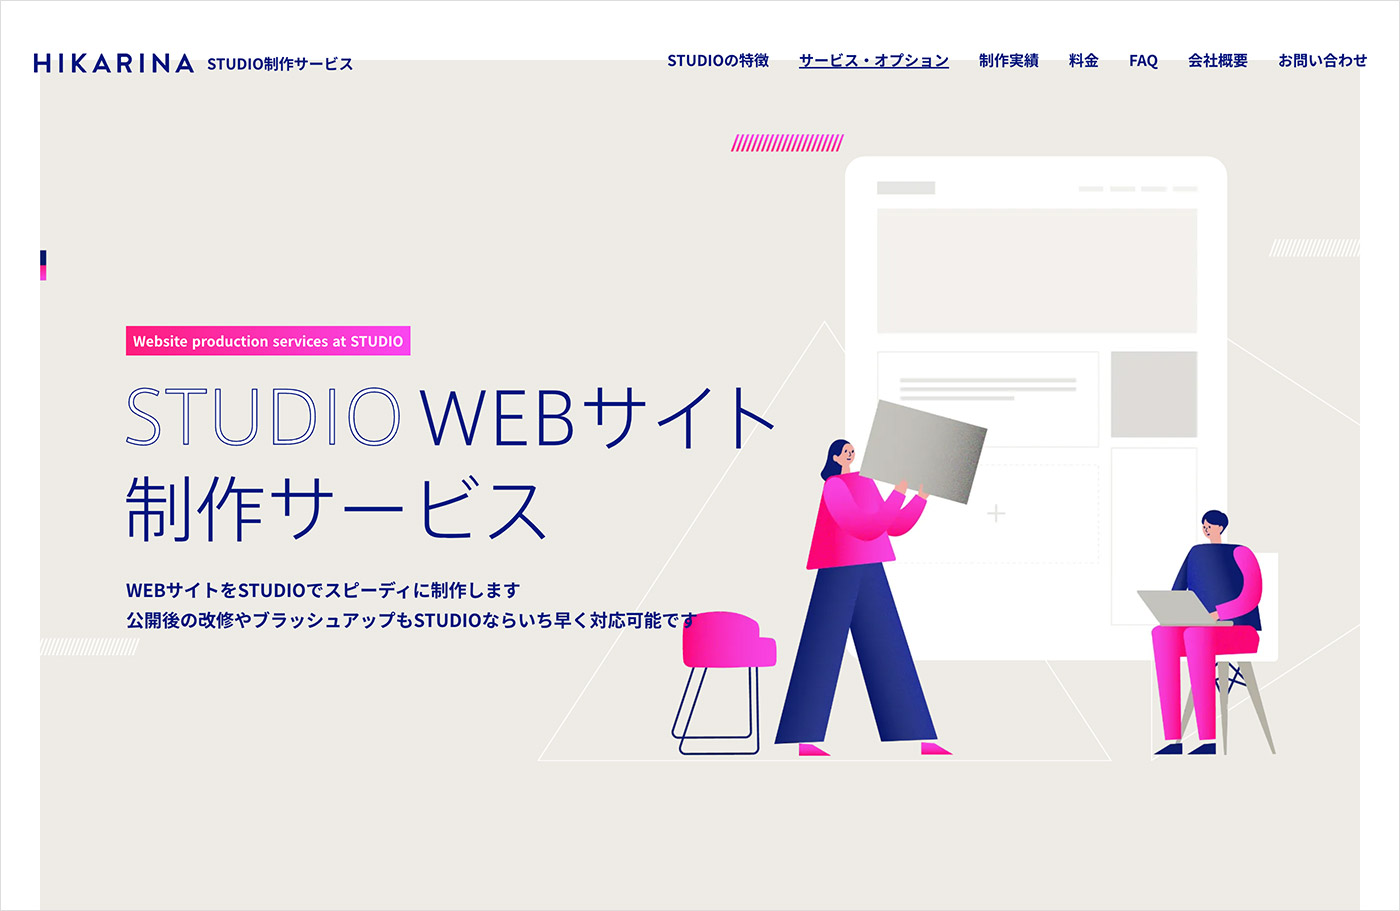 STUDIO WEBサイト制作サービス – HIKARINAウェブサイトの画面キャプチャ画像